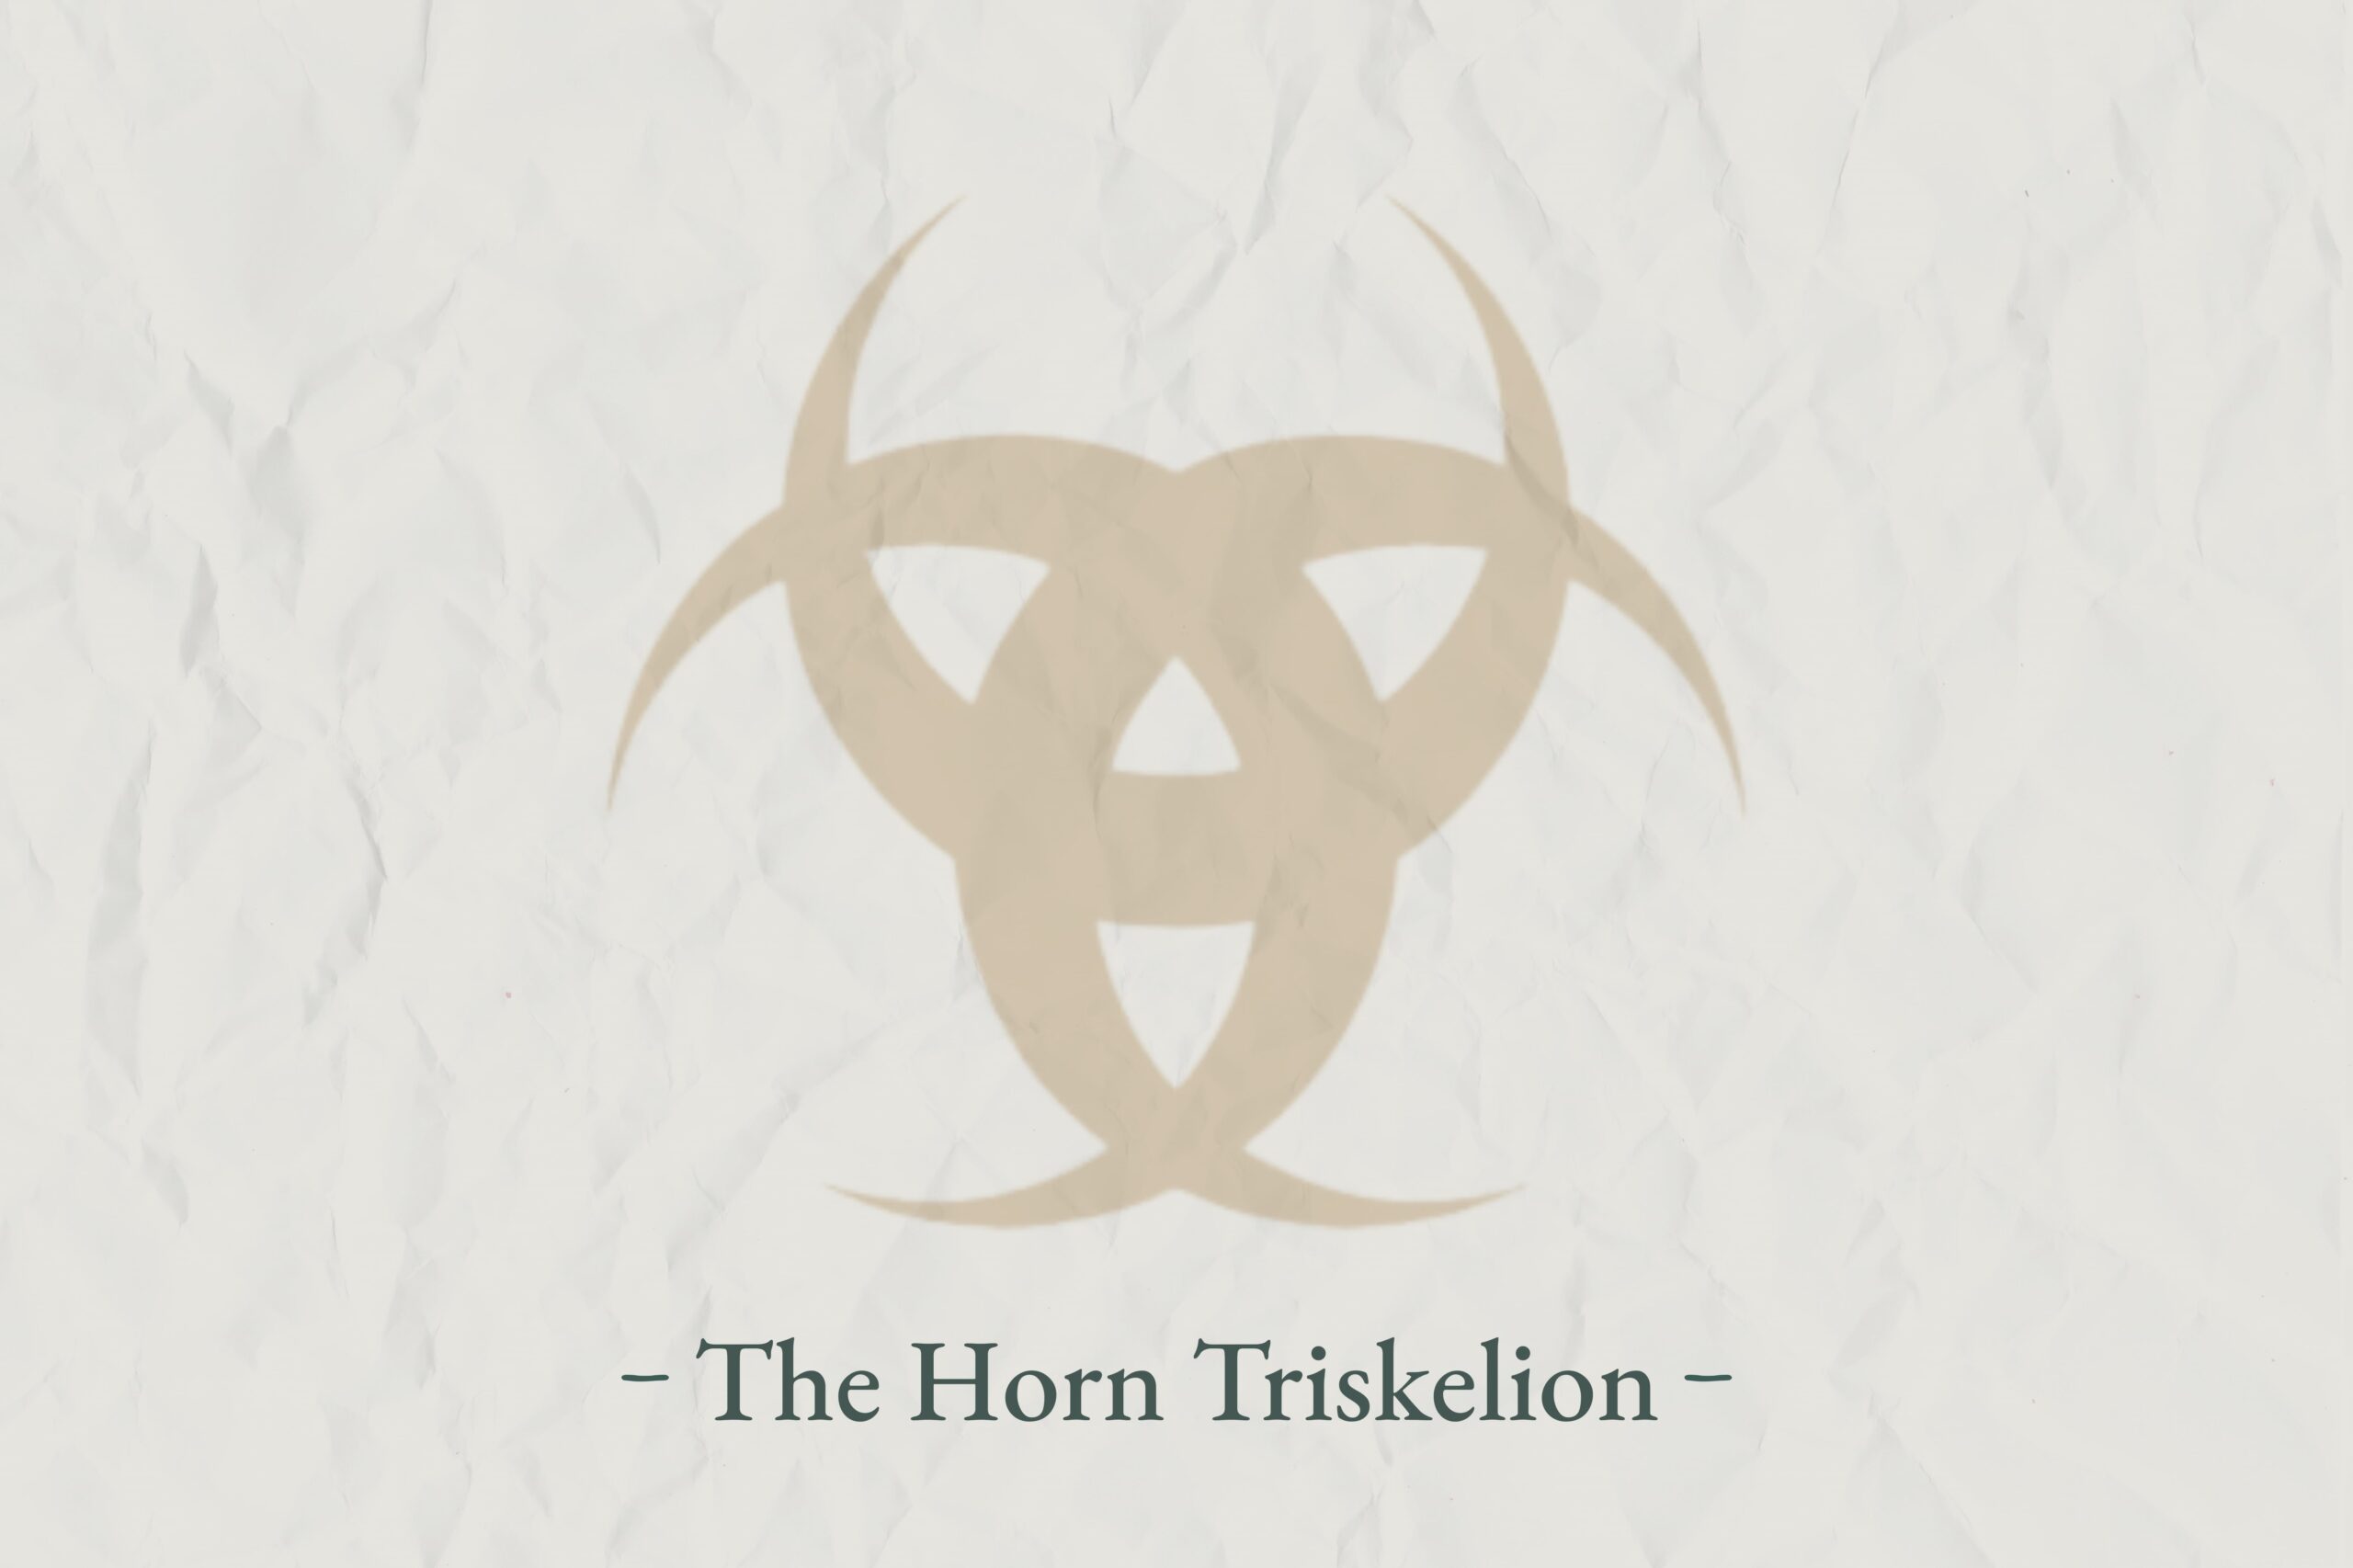 The Horn Triskelion